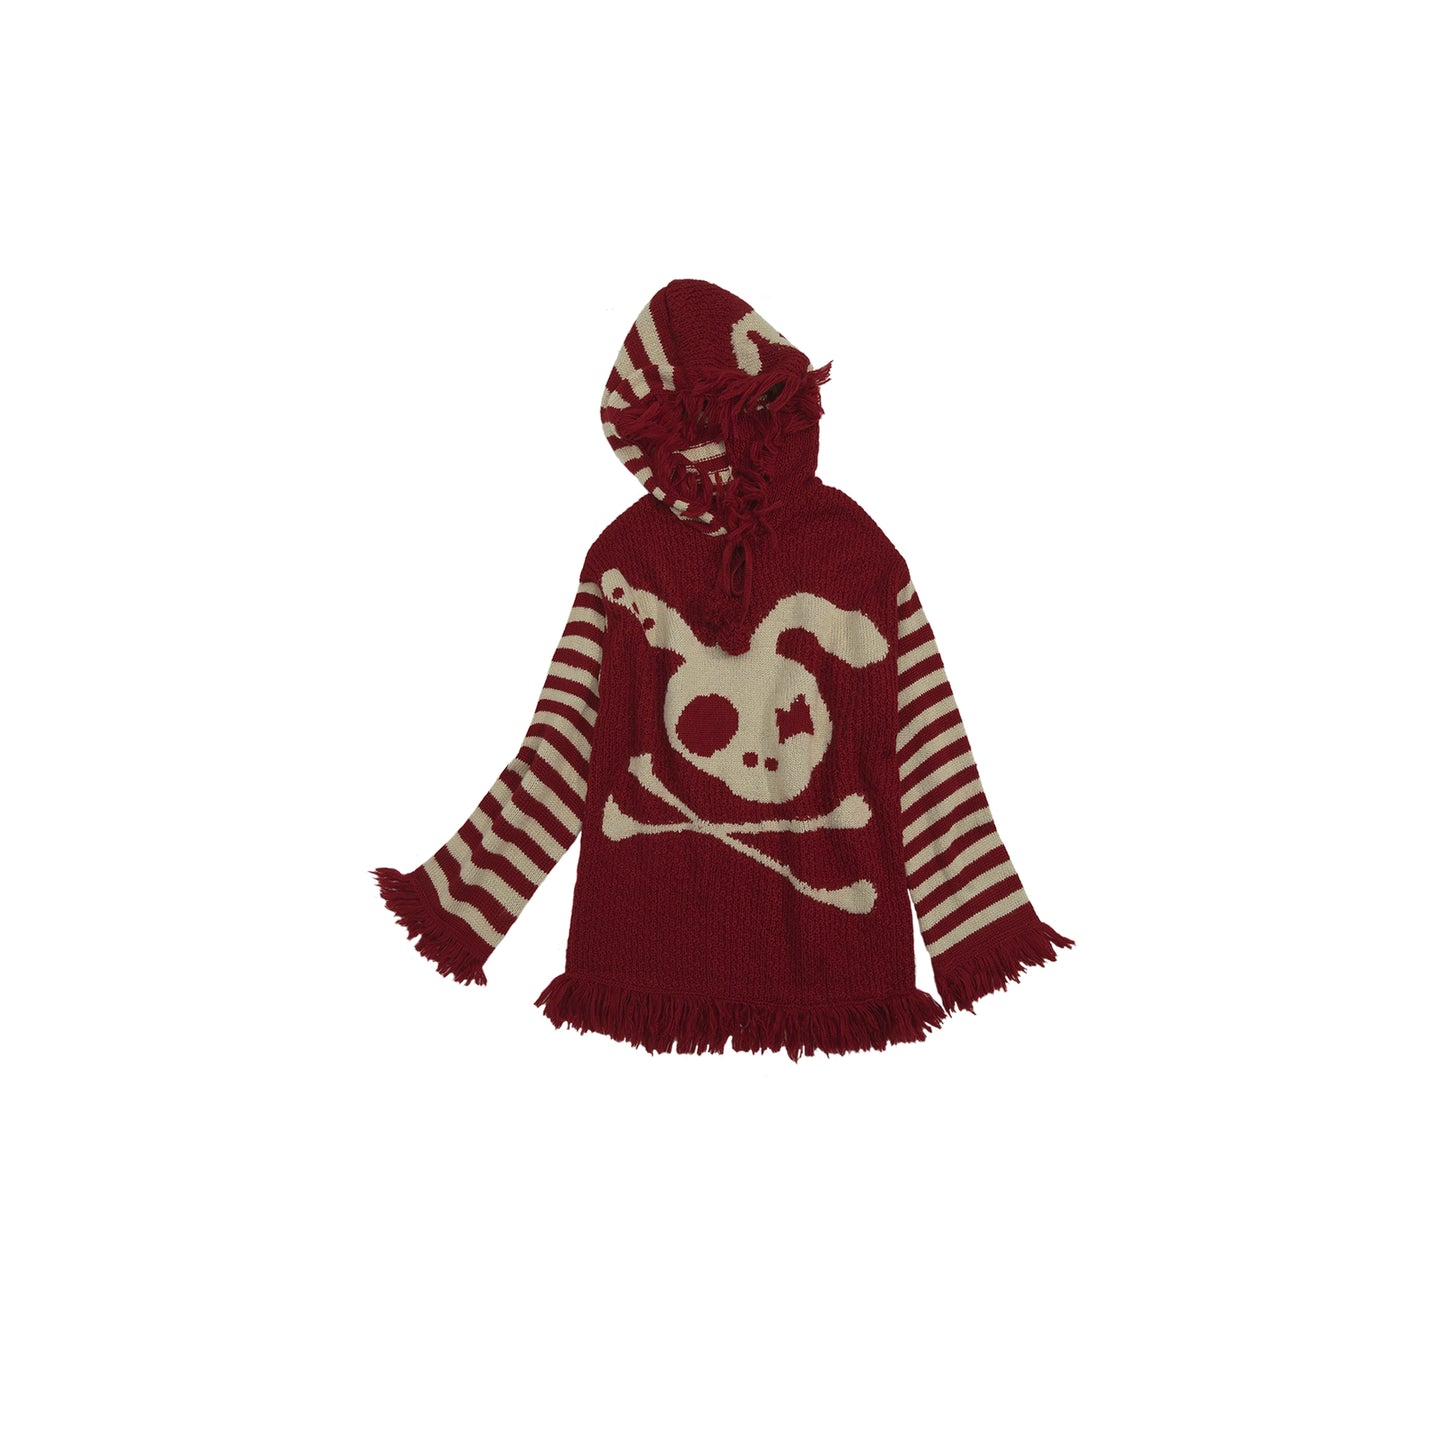 Punk street skeleton rabbit hooded top